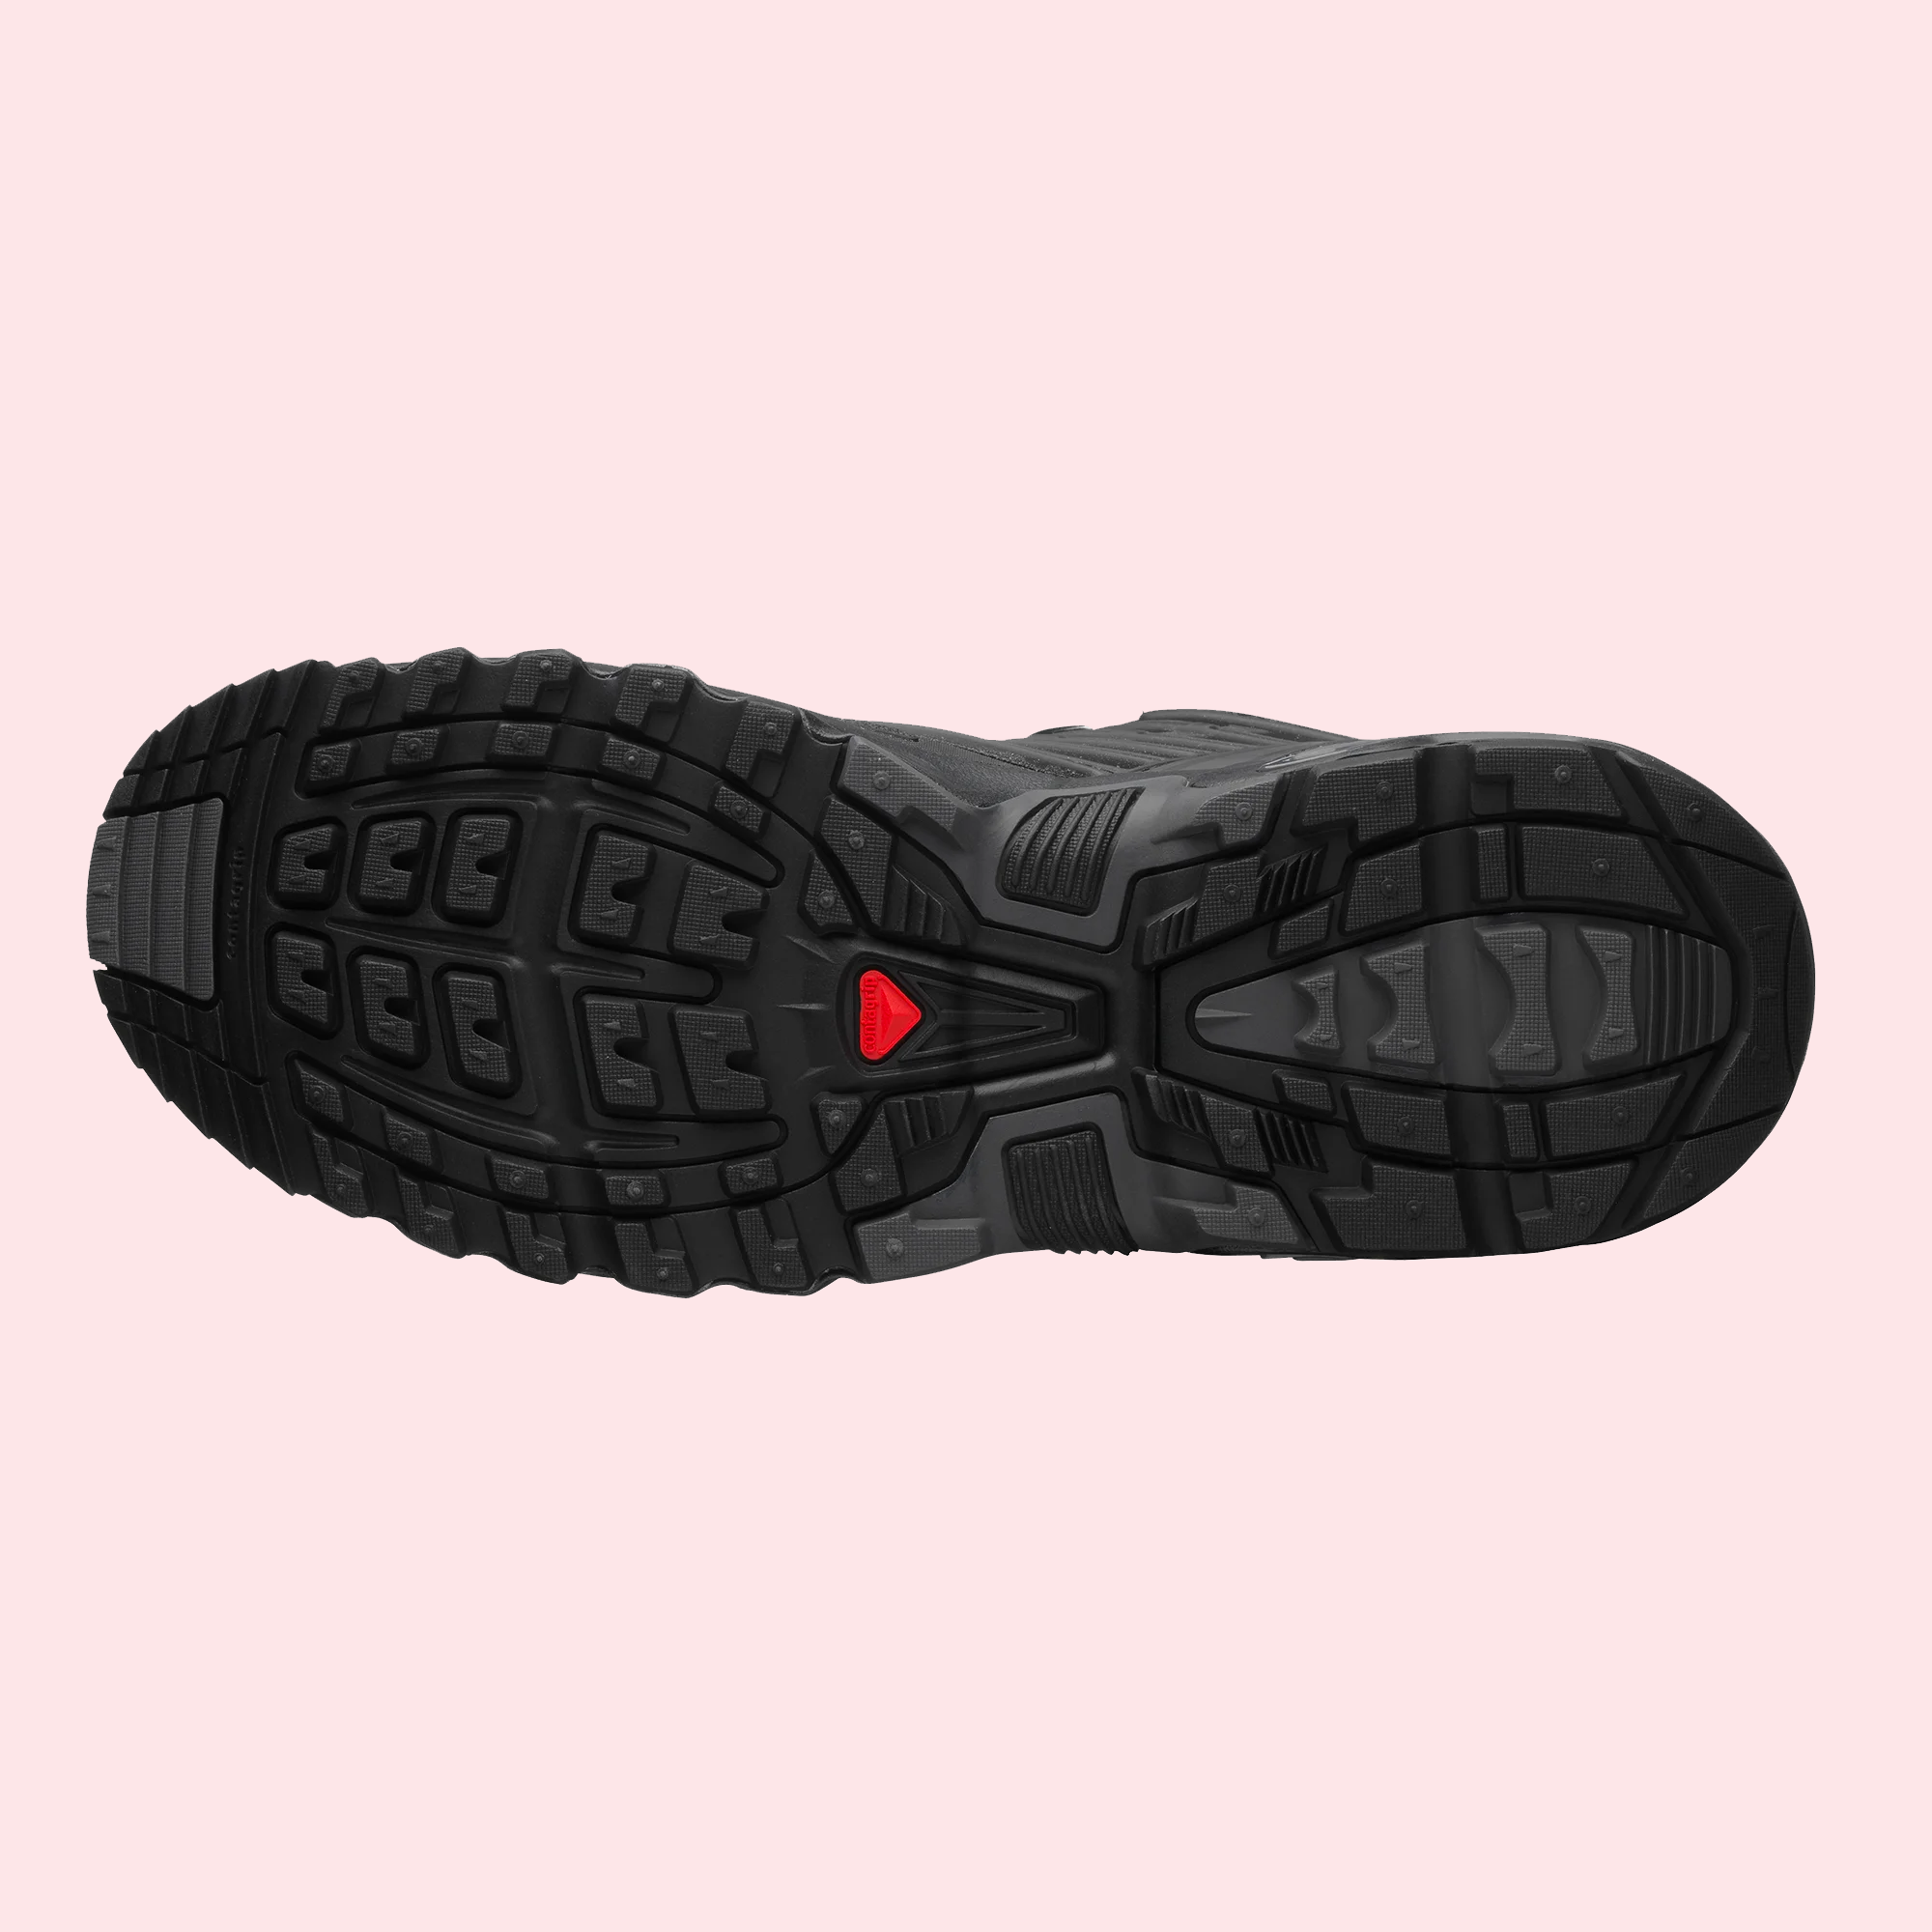 Salomon sneakers ACS PRO Black/Black/Black sole